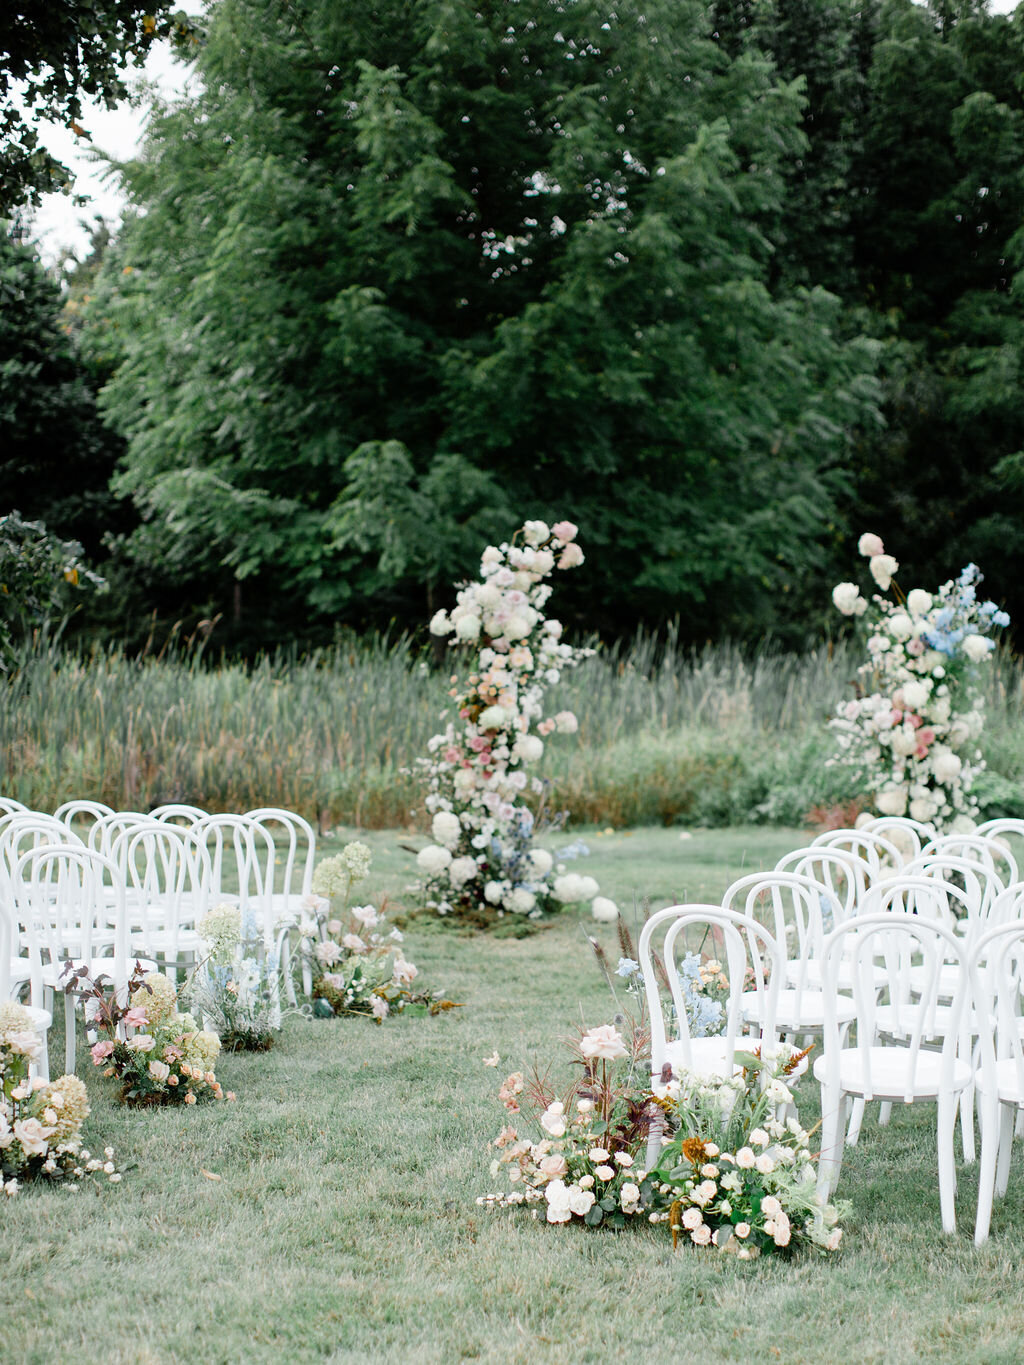 ubc-garden-wedding-ceremony-decor